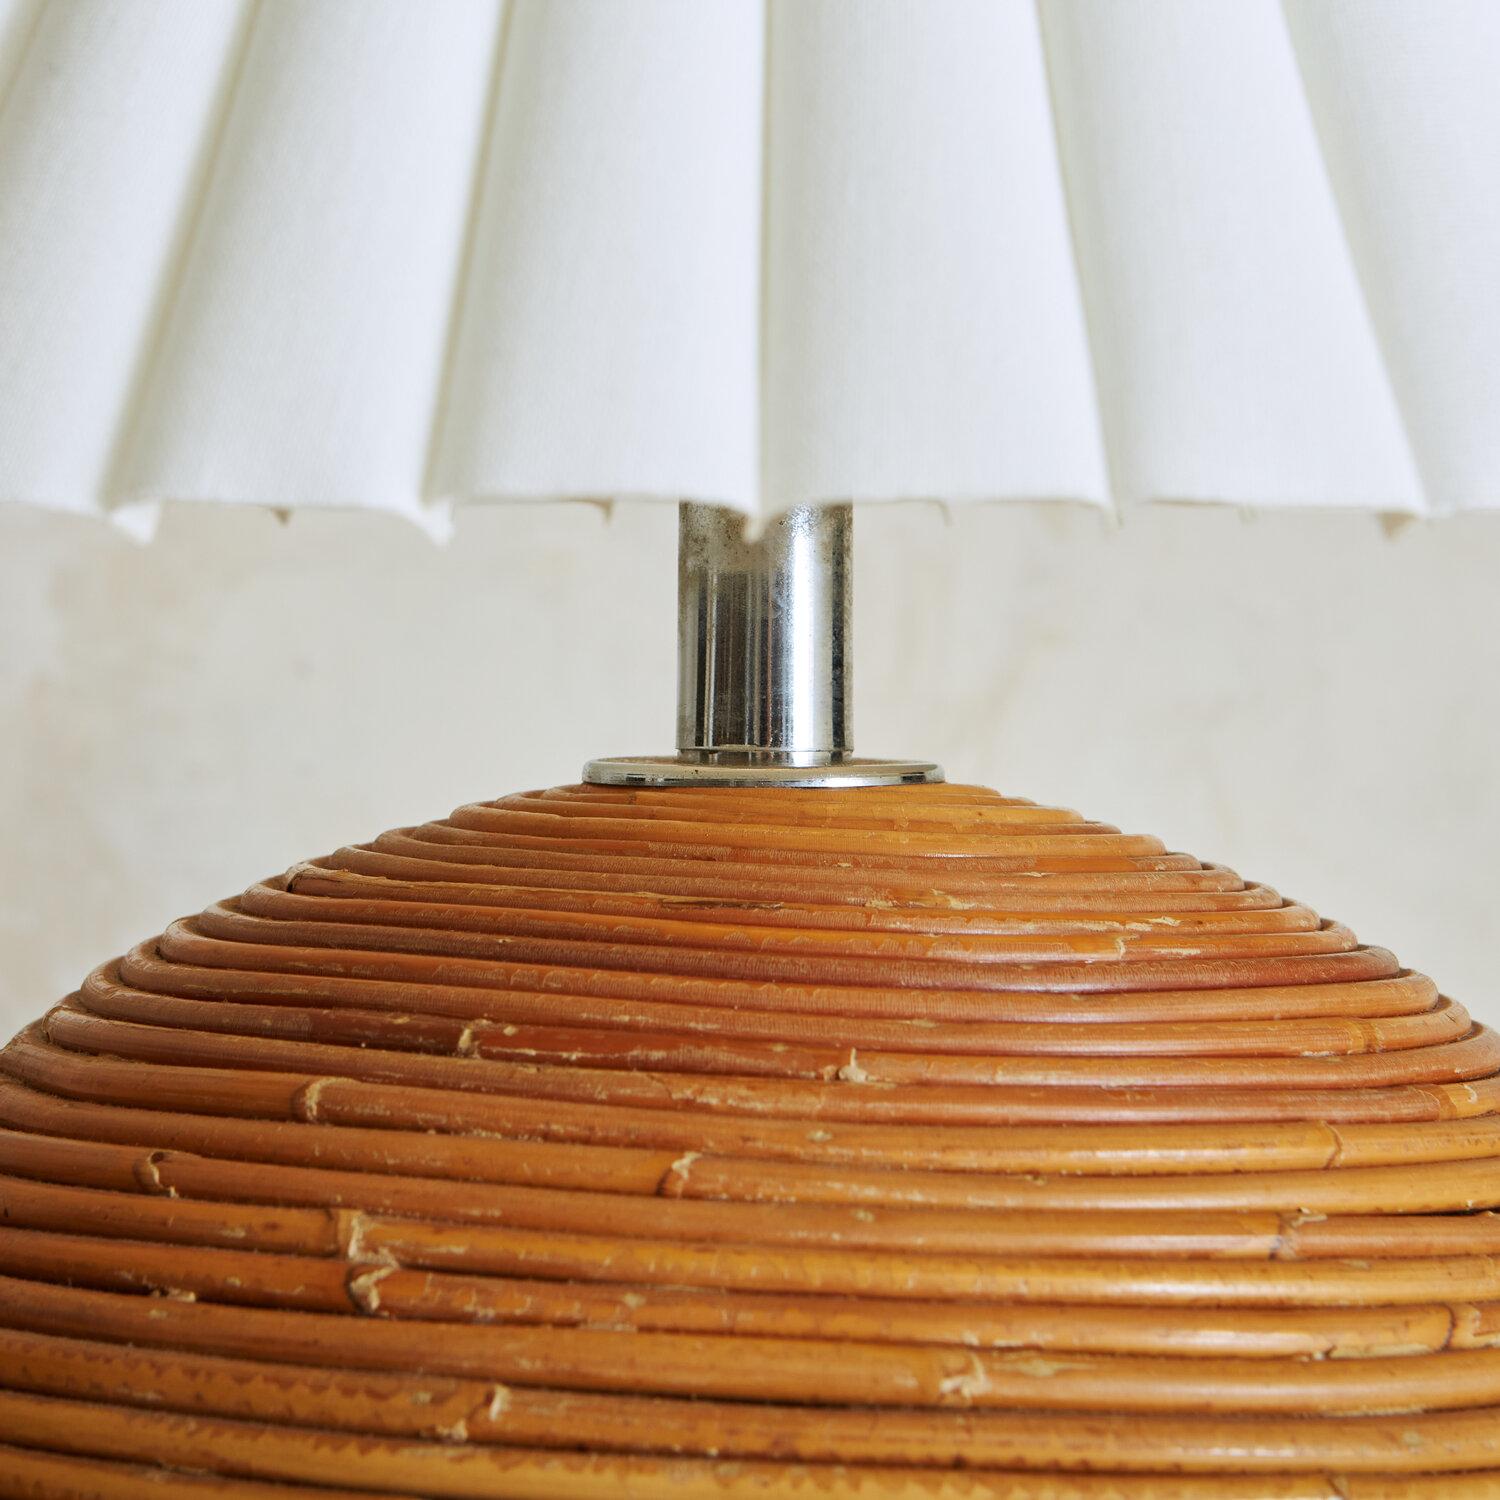 round base table lamp